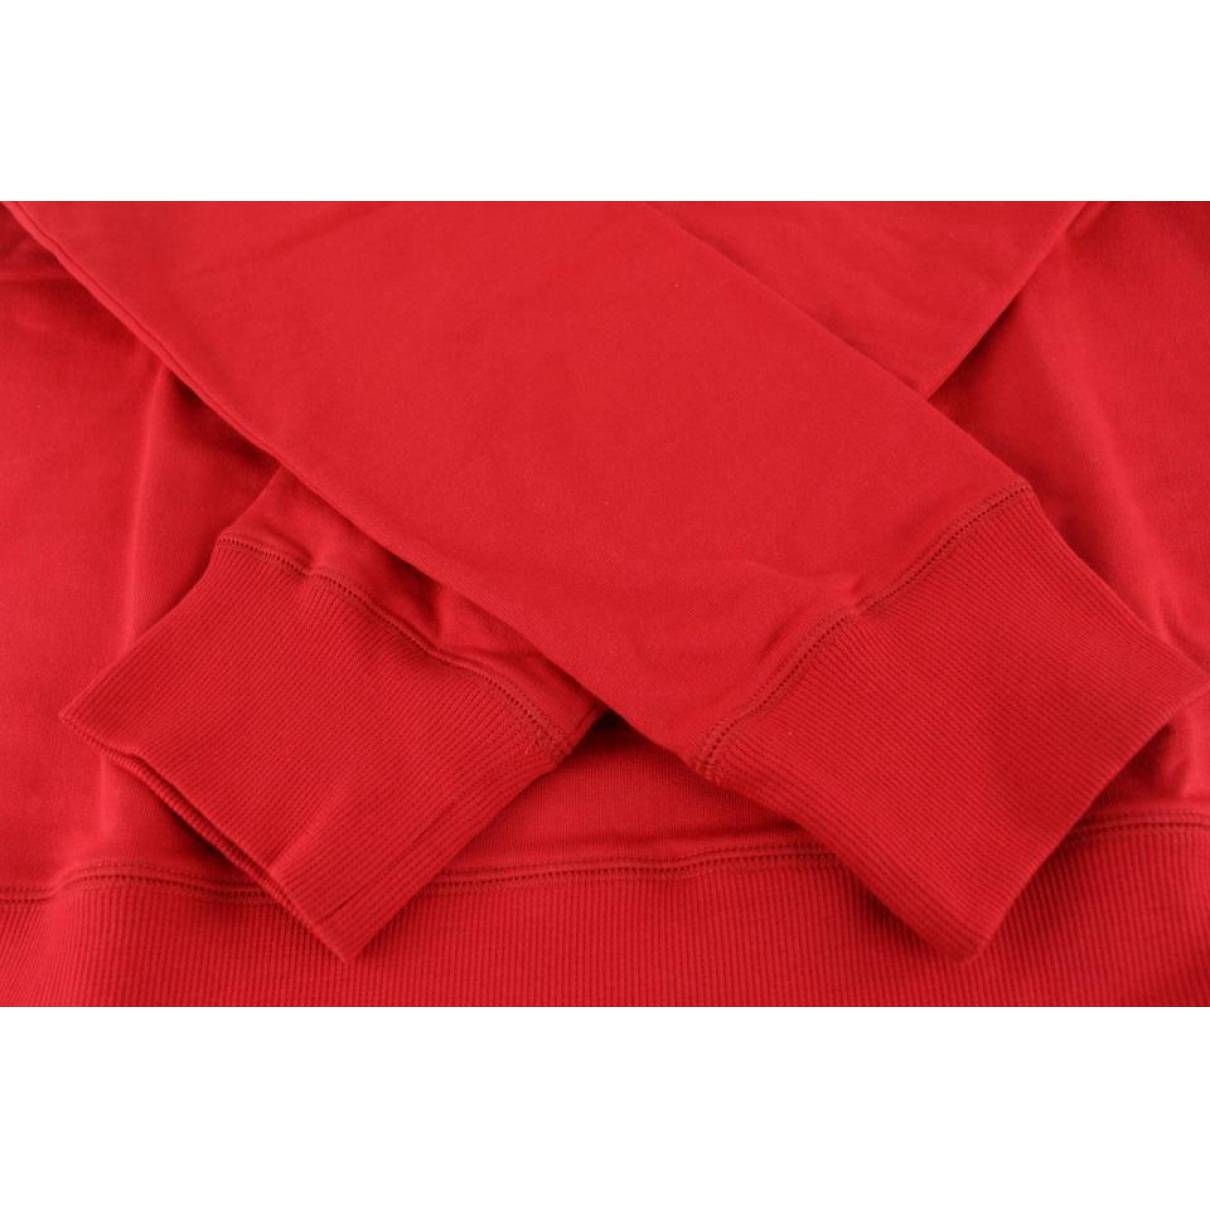 T-shirt Louis Vuitton x Supreme Red size L International in Cotton